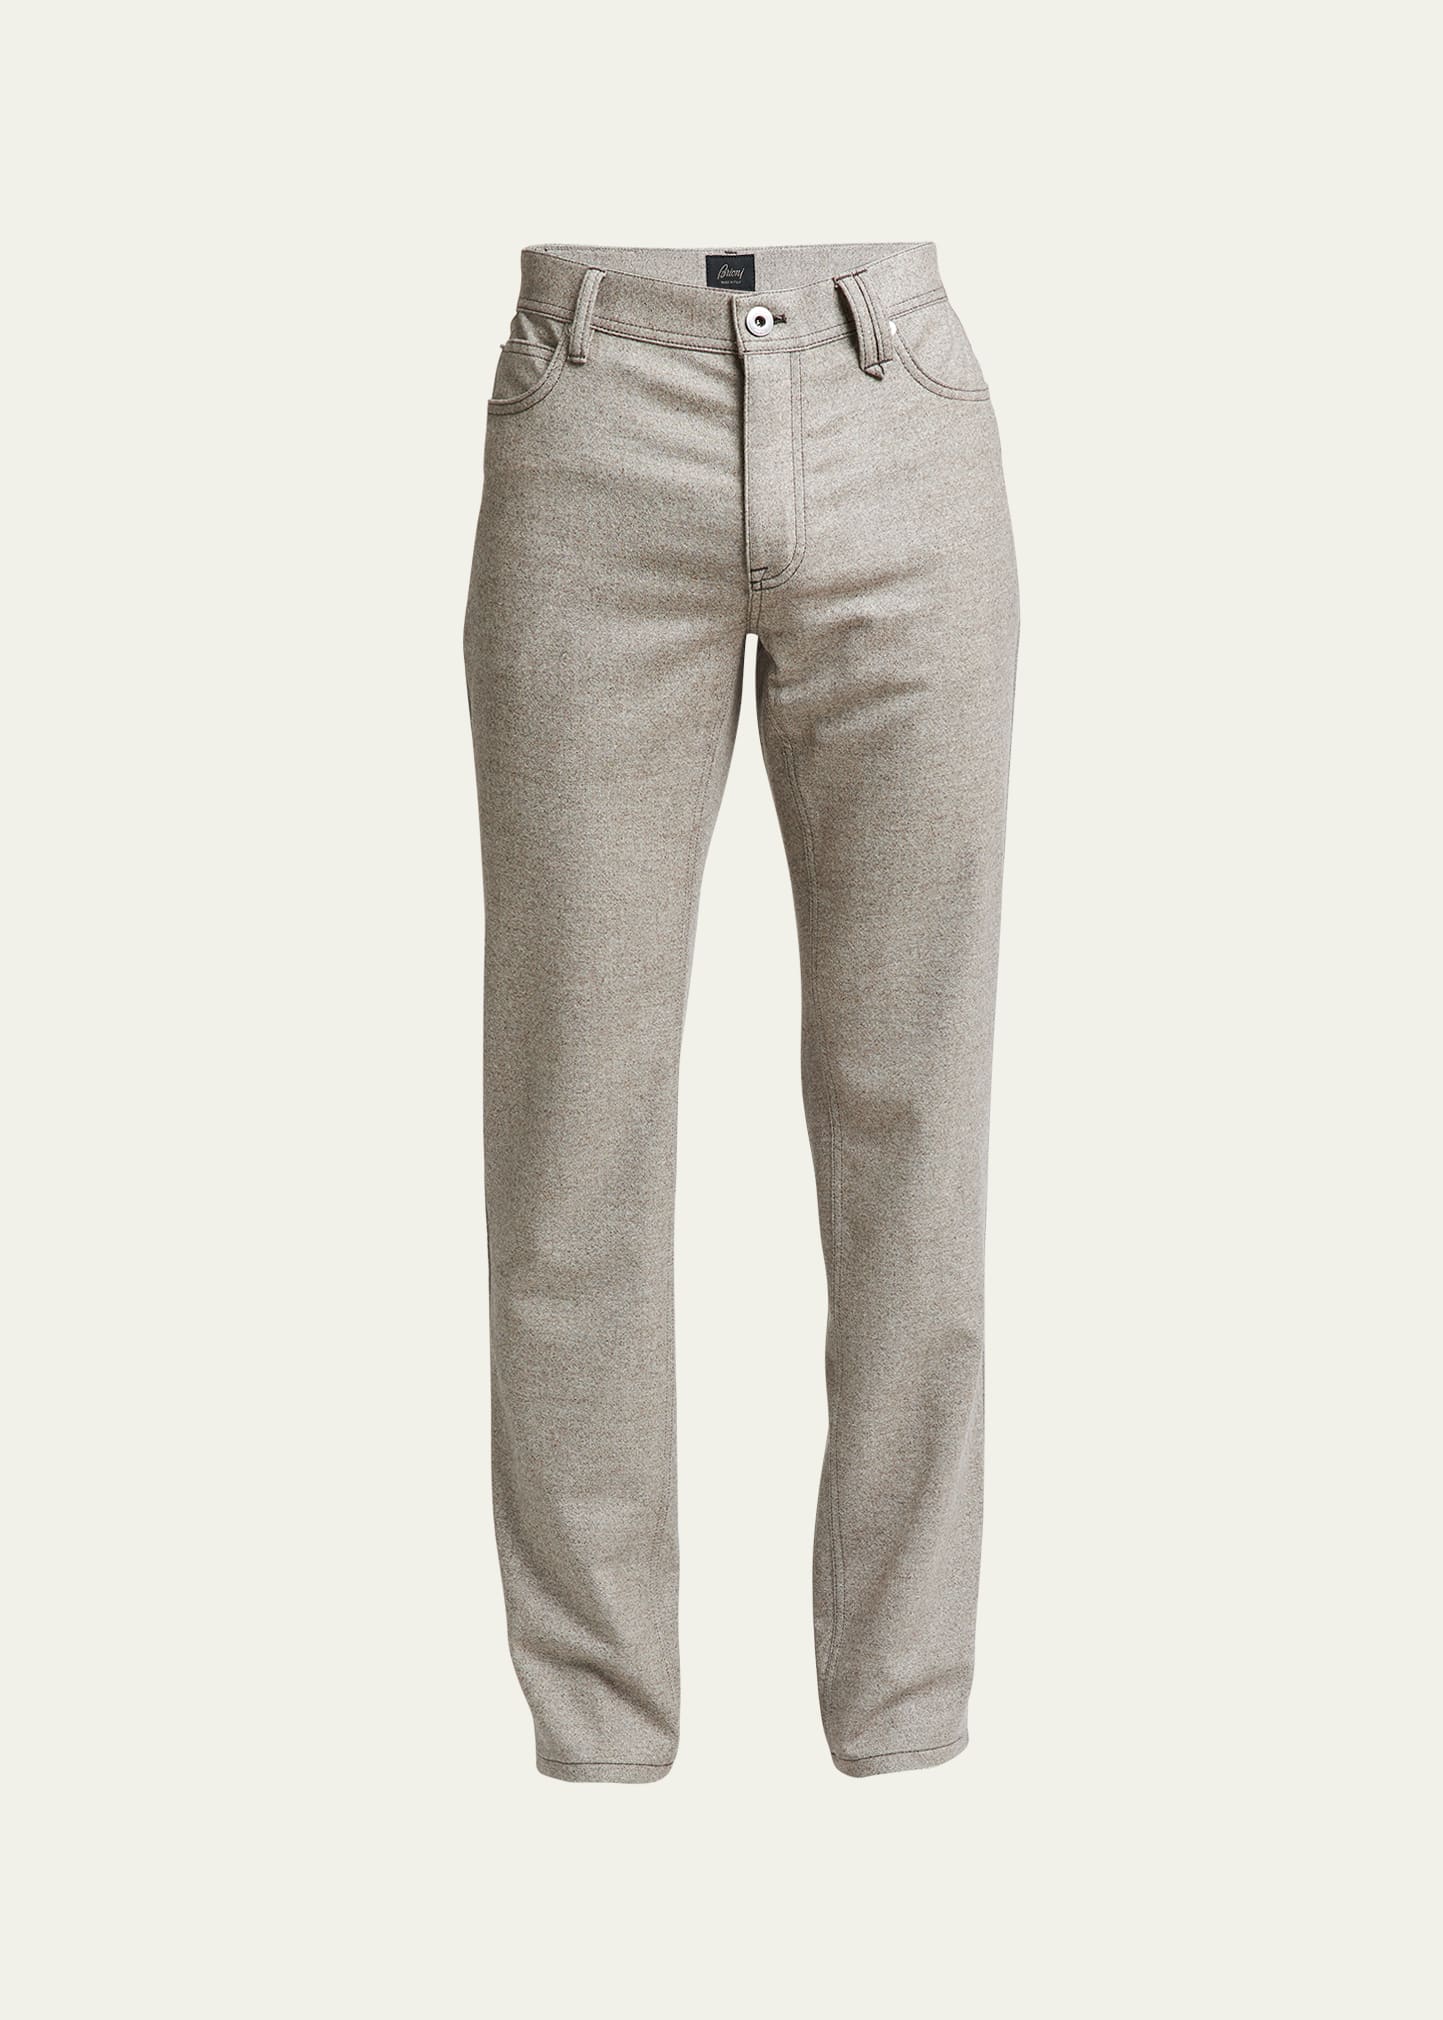 Men's Cotton-Stretch 5-Pocket Pants